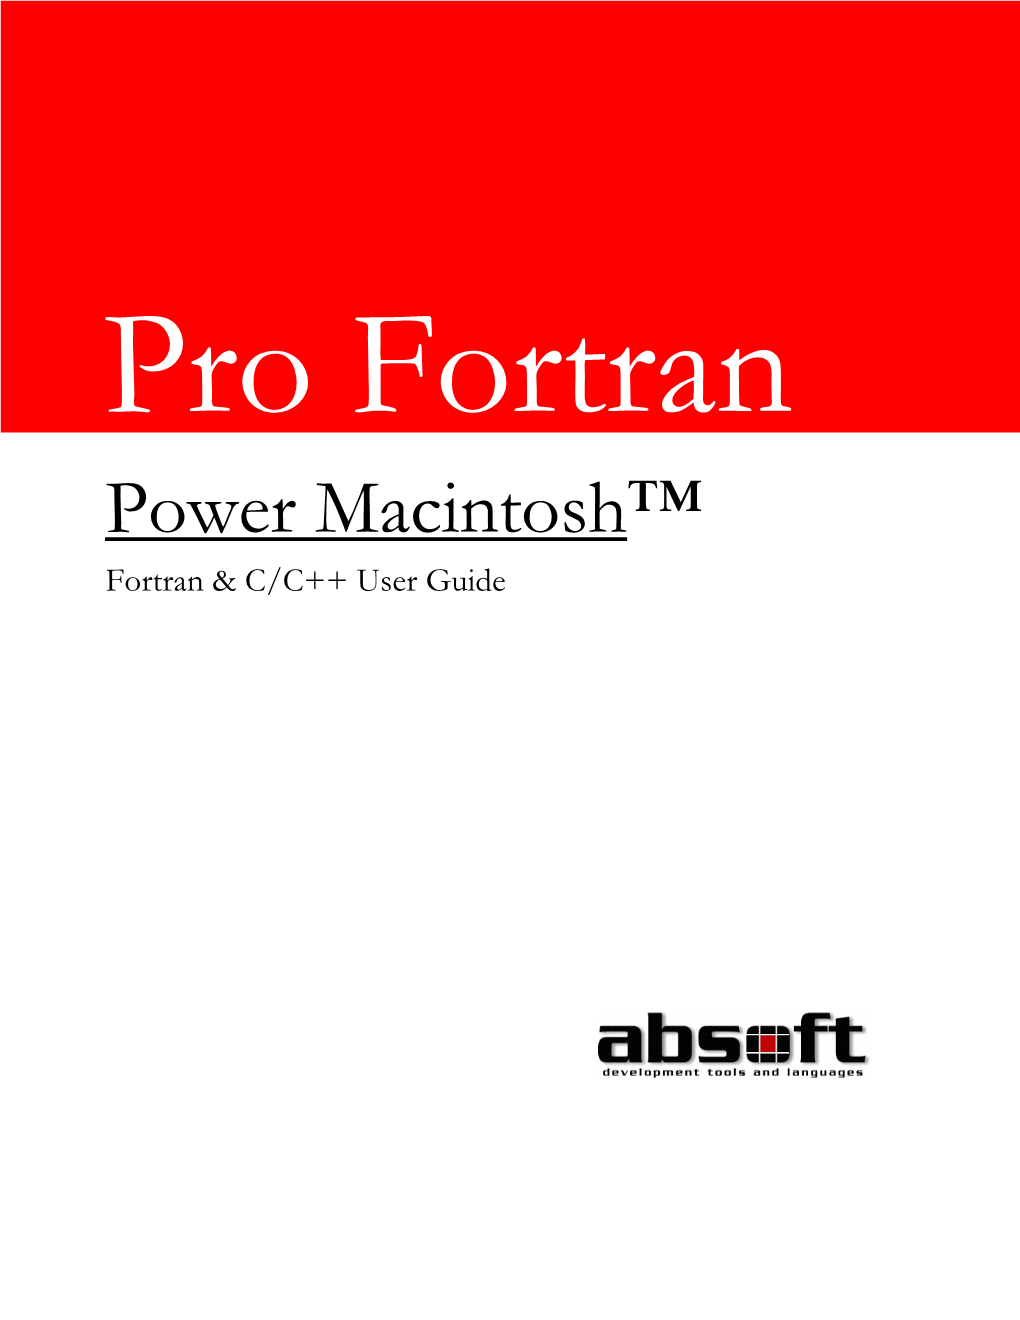 Power Macintosh™ Fortran & C/C++ User Guide Pro Fortran Power Macintosh™ Fortran & C/C++ User Guide